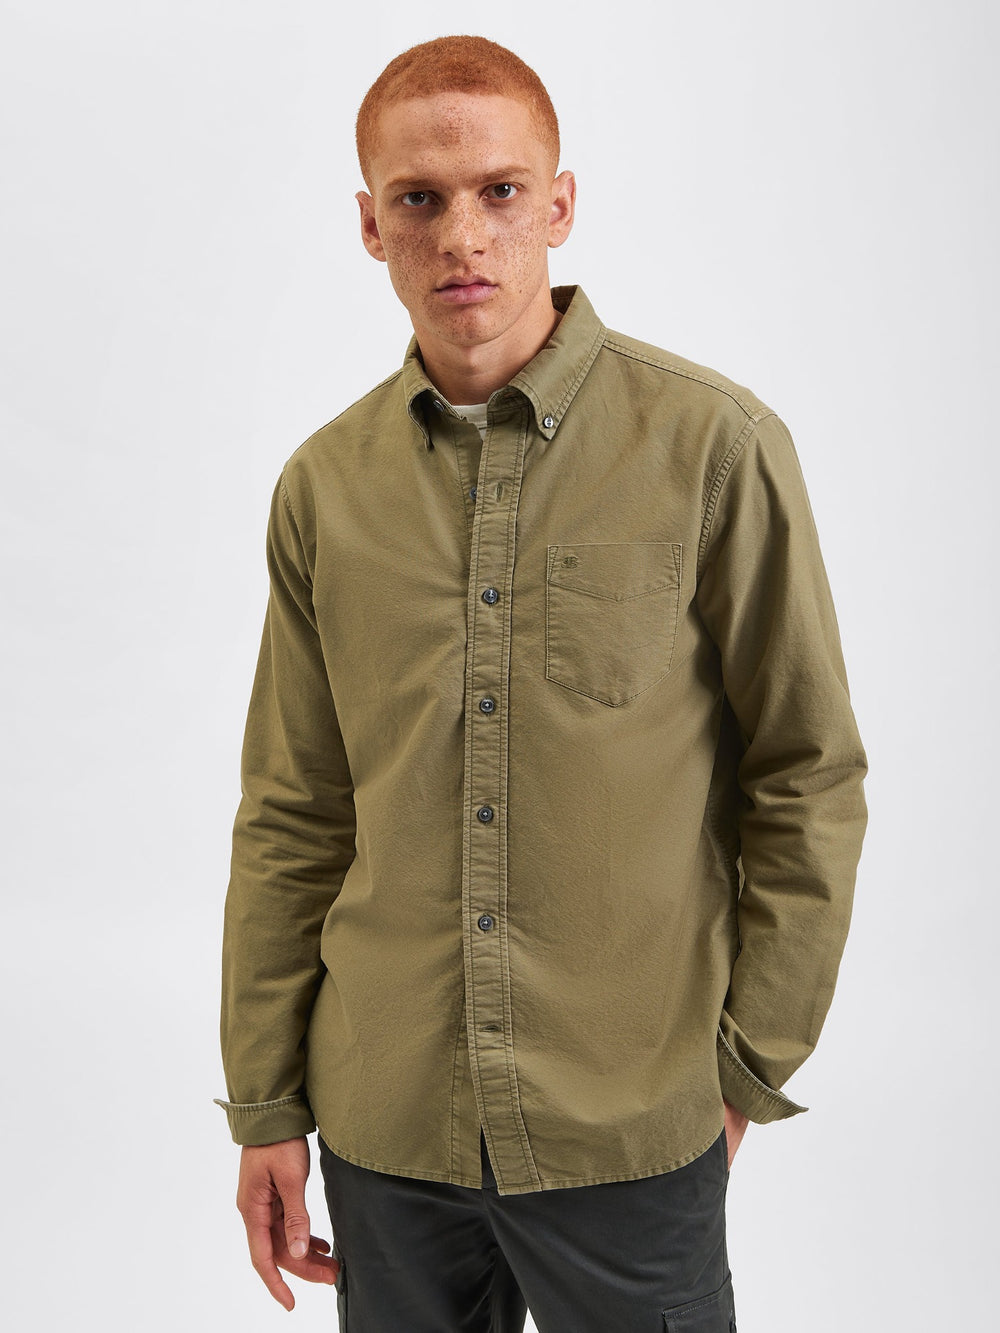 Beatnik Oxford Garment Dye Shirt - Military Green